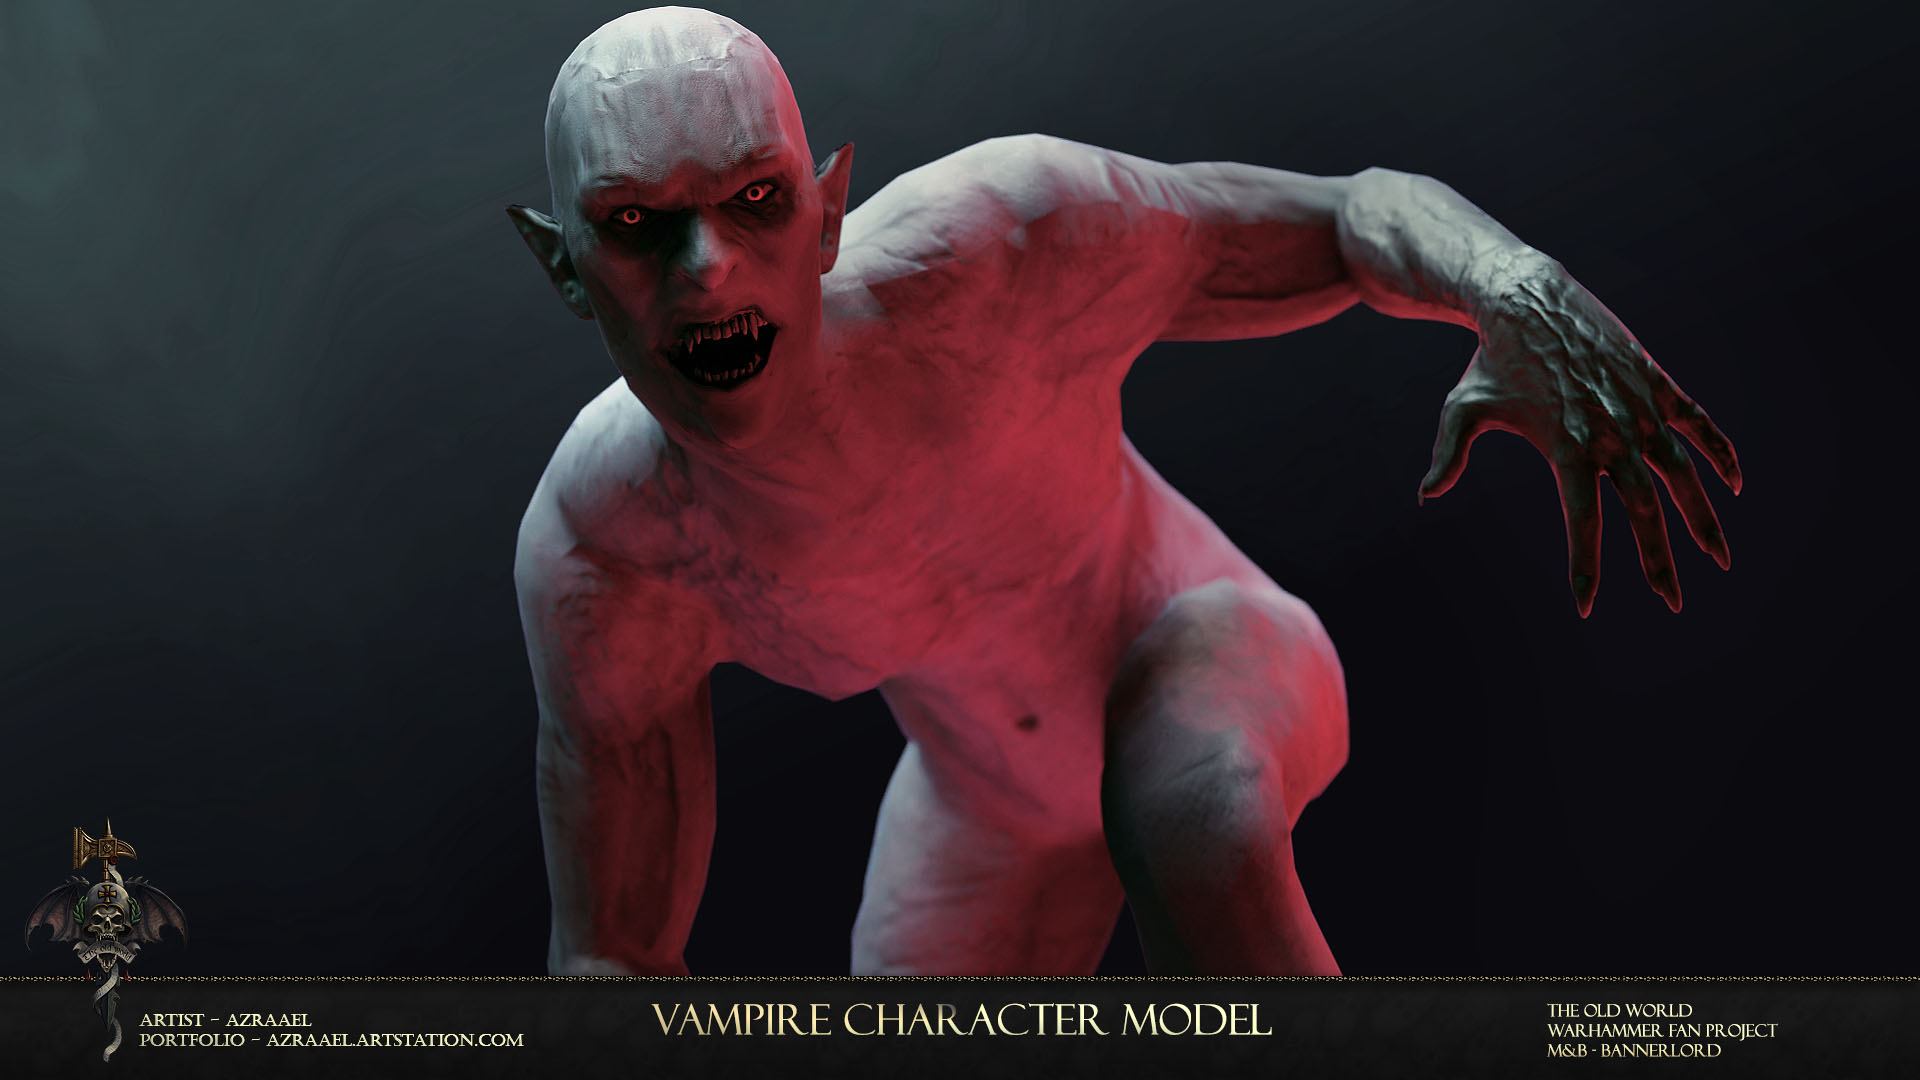 Vampire character model